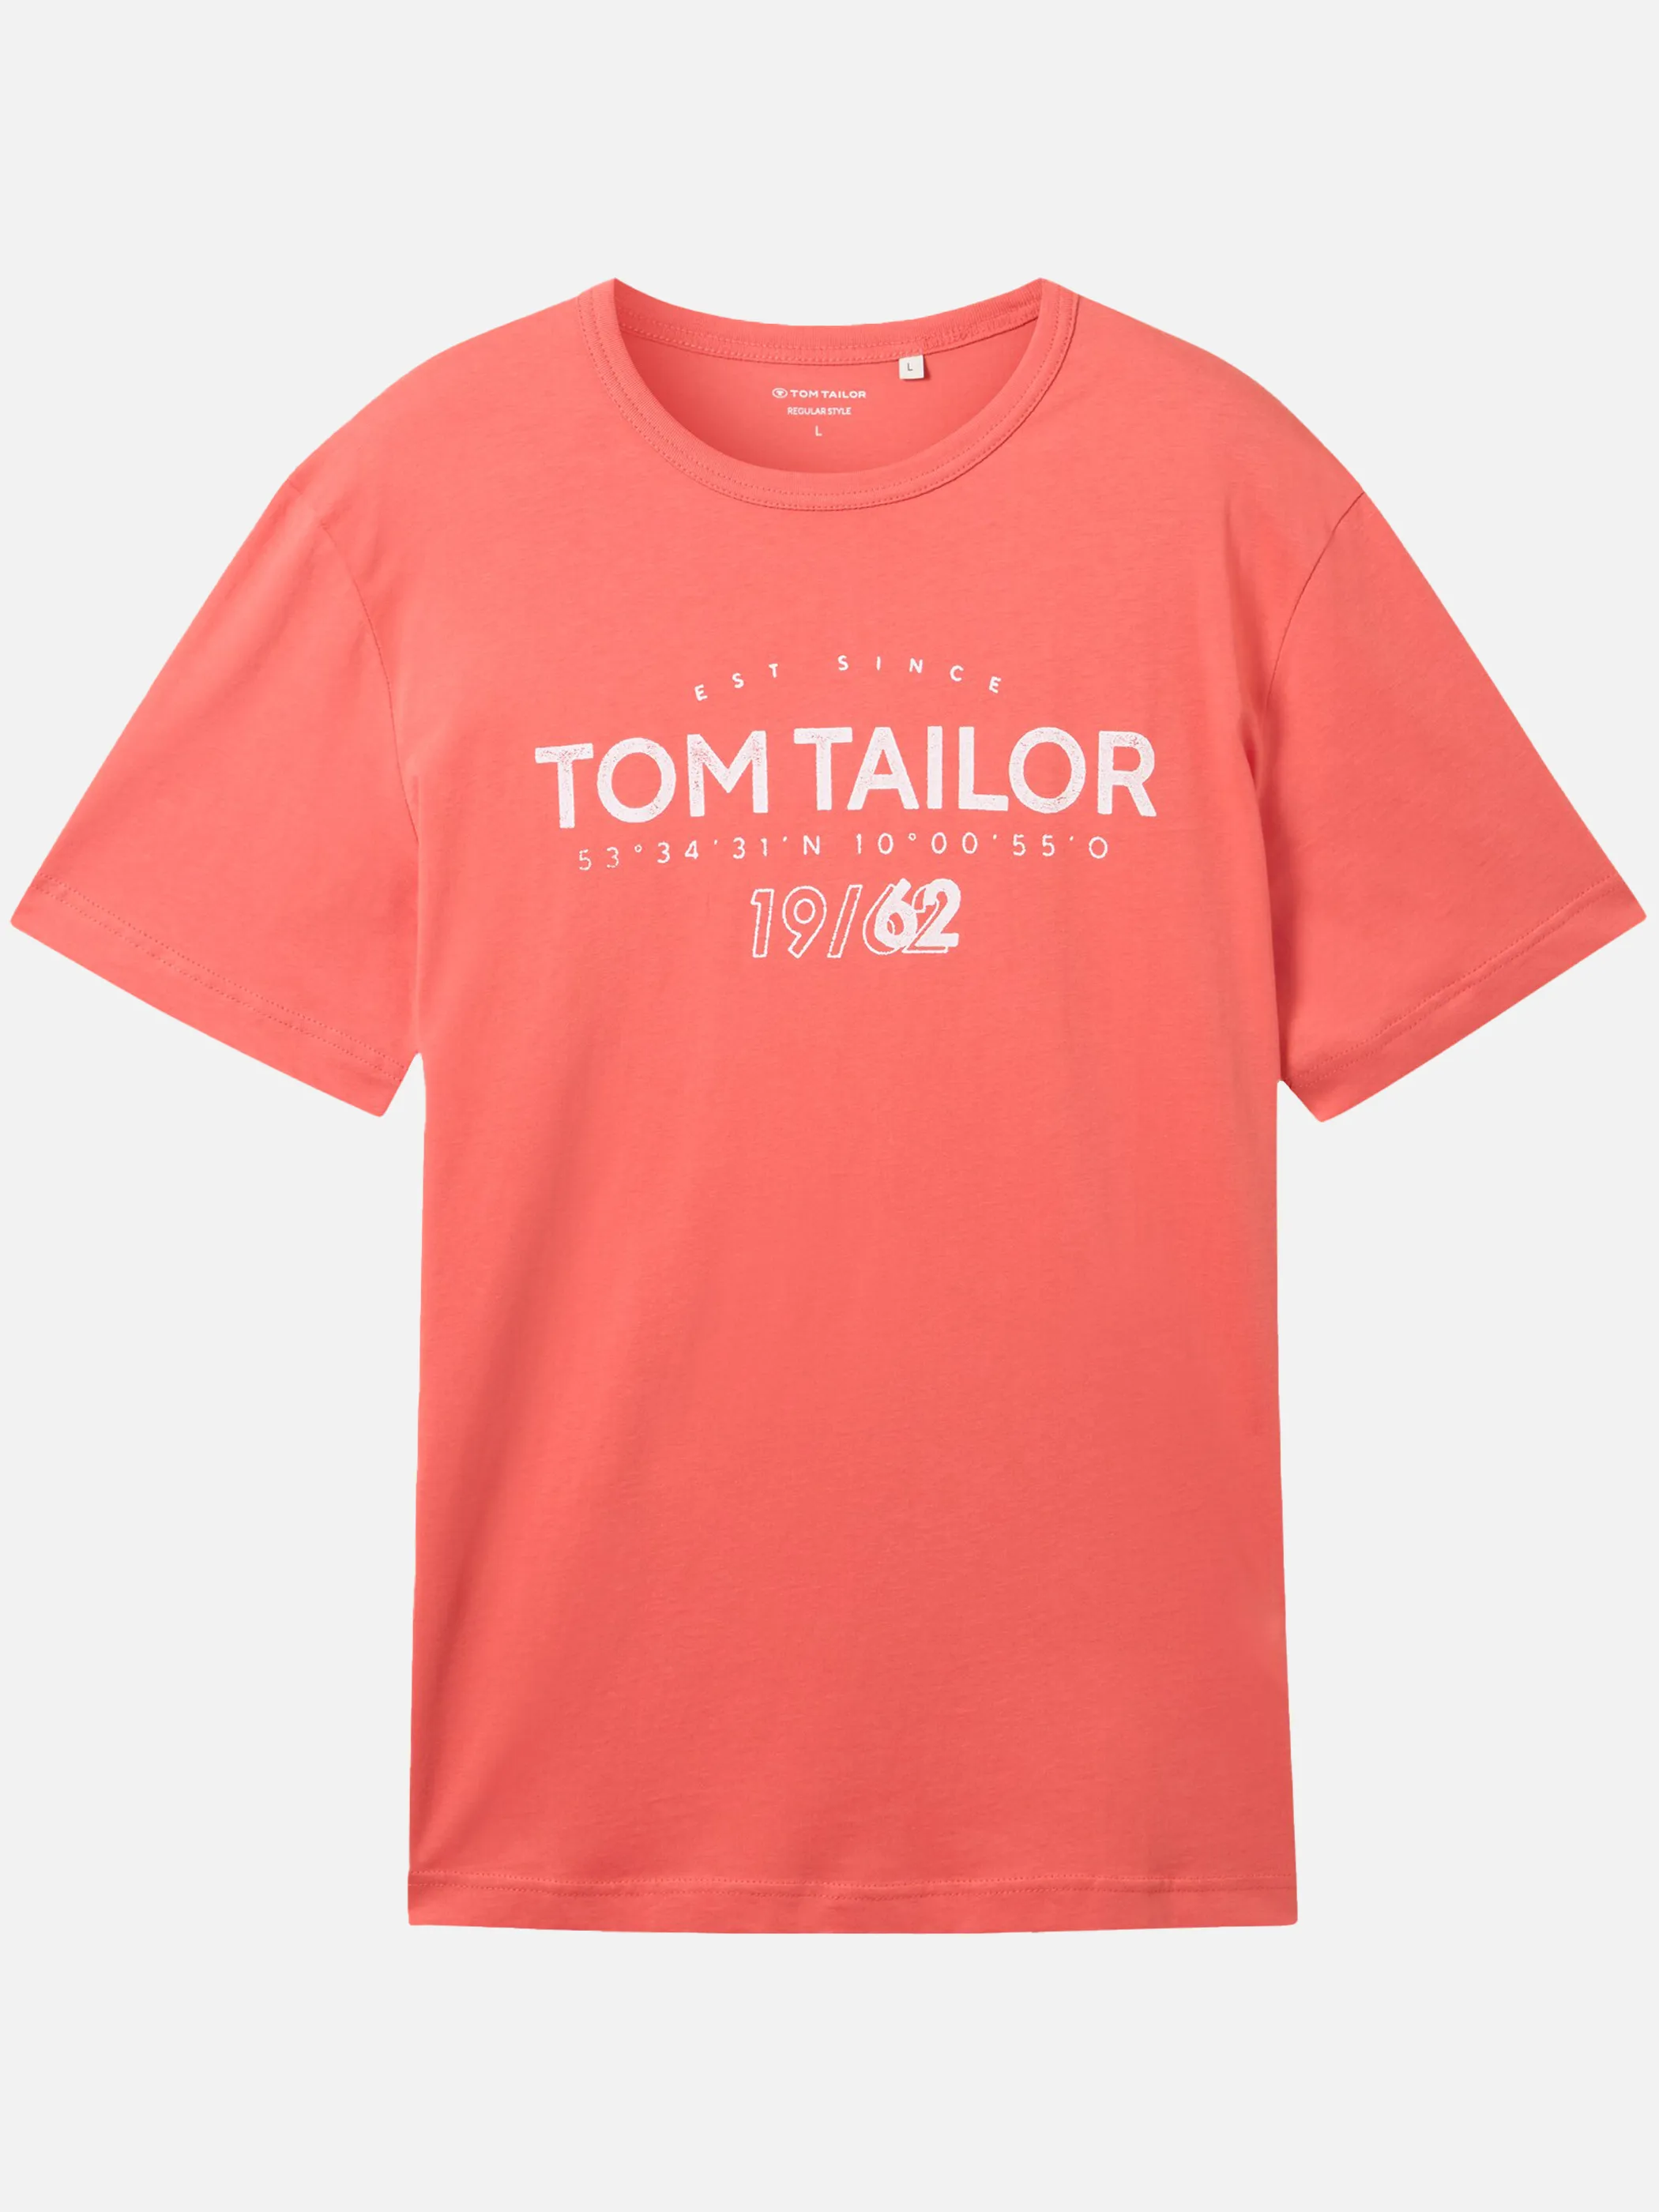 Tom Tailor 1041871 printed t-shirt Pink 895641 26202 1